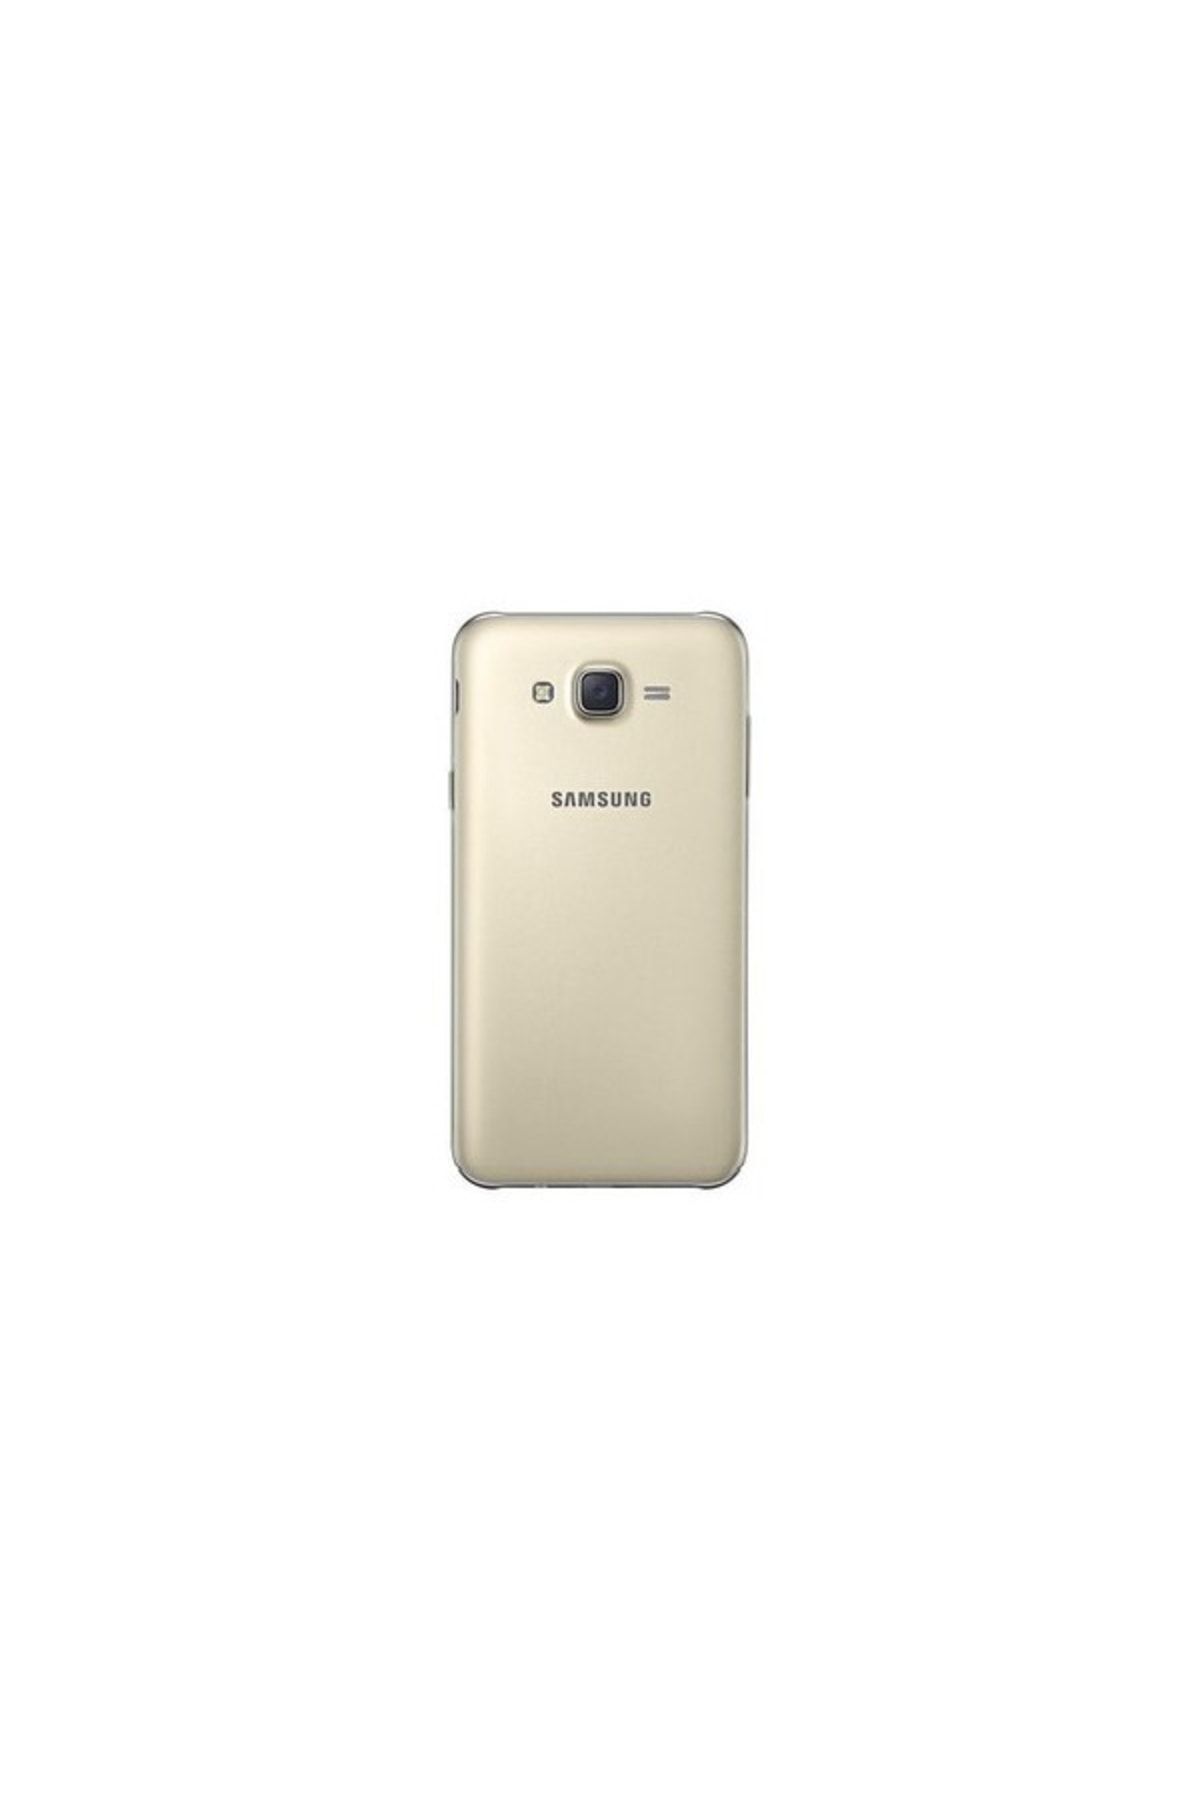 EDA TEKNİK Samsung Galaxy J7 Core J701 Arka Kapak Pil Kapağı Gold